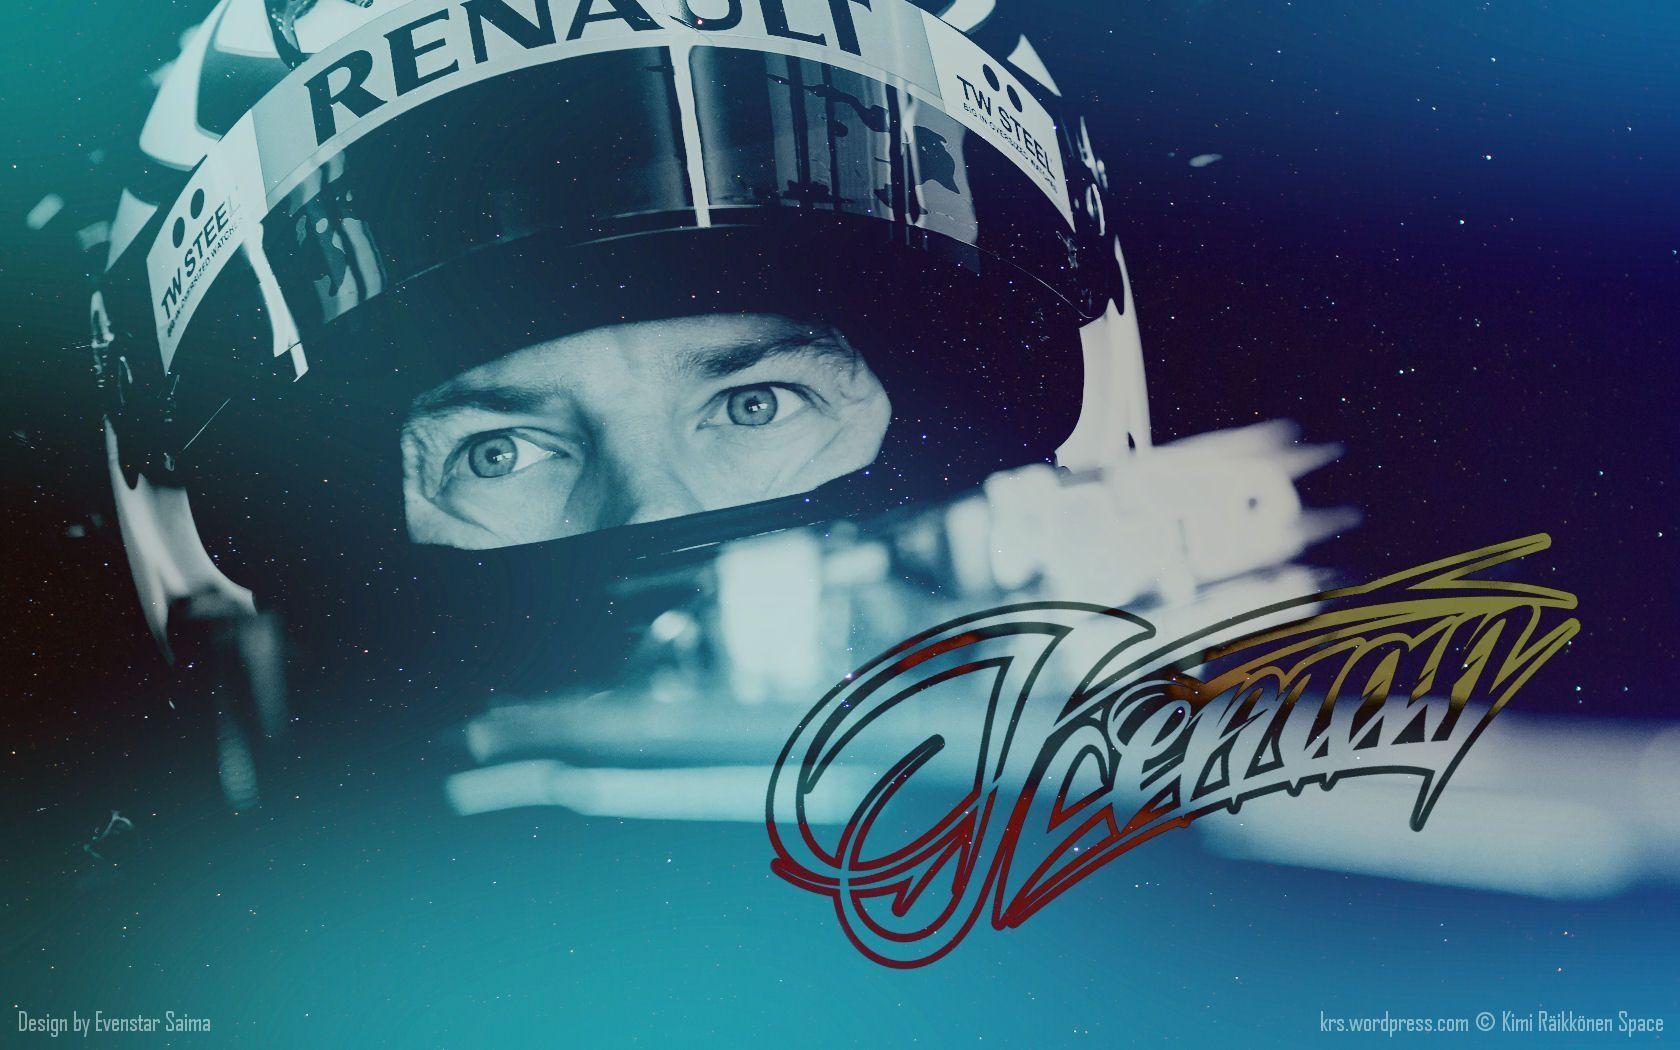 Iceman for your desktop. Kimi Räikkönen Space